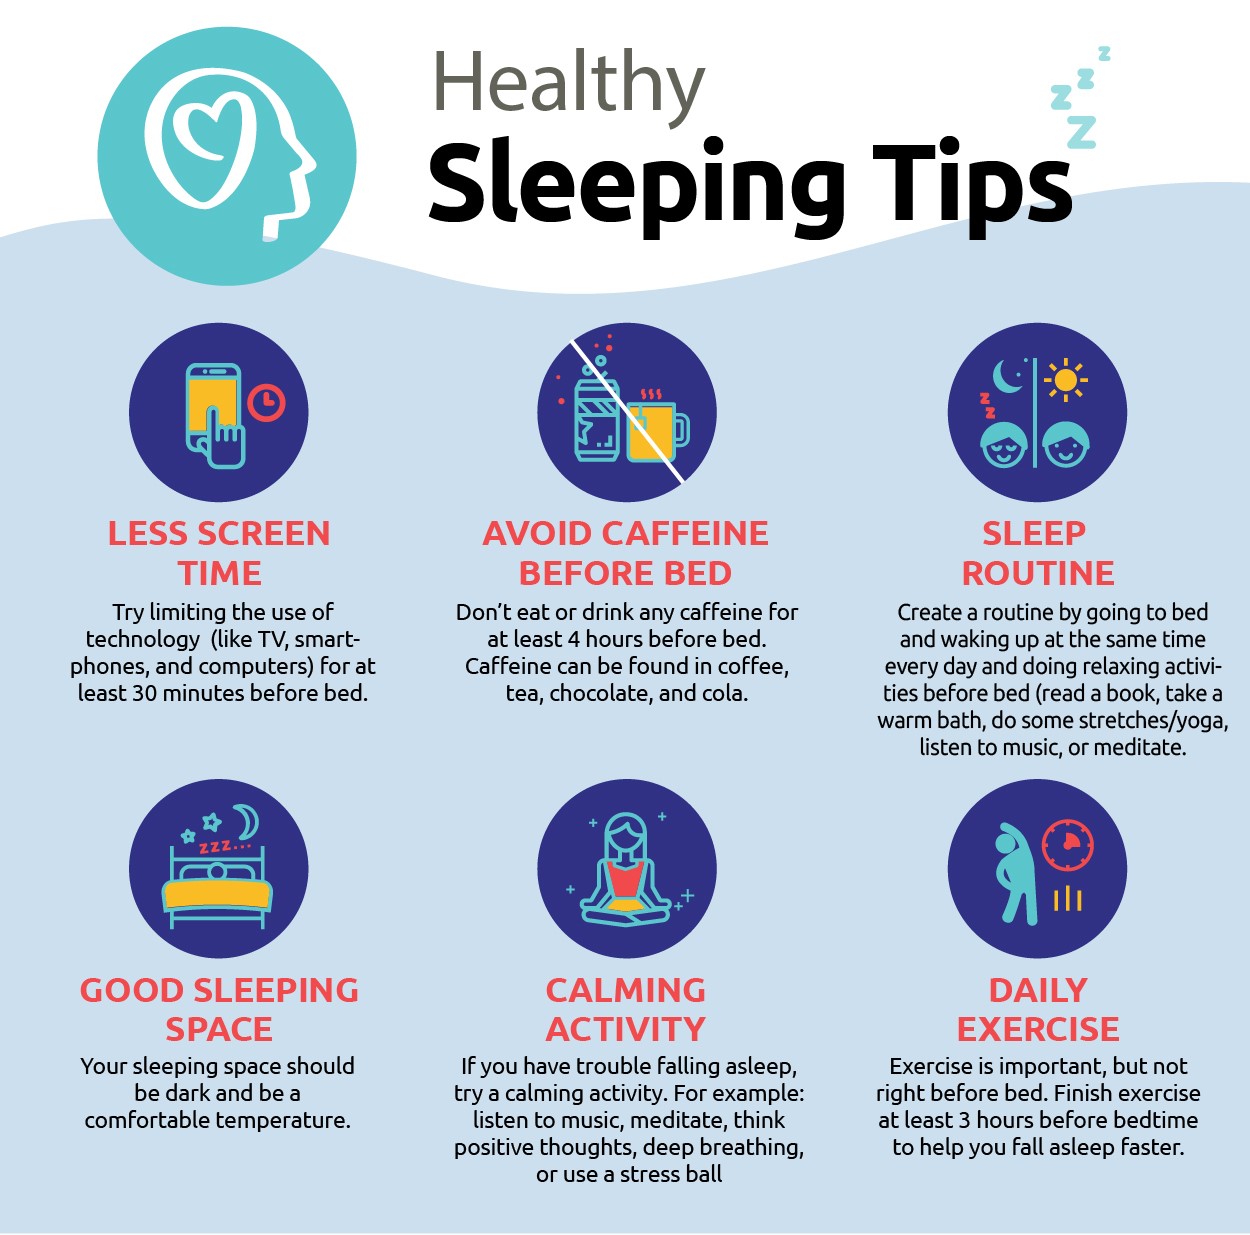 Health and sleep strategies